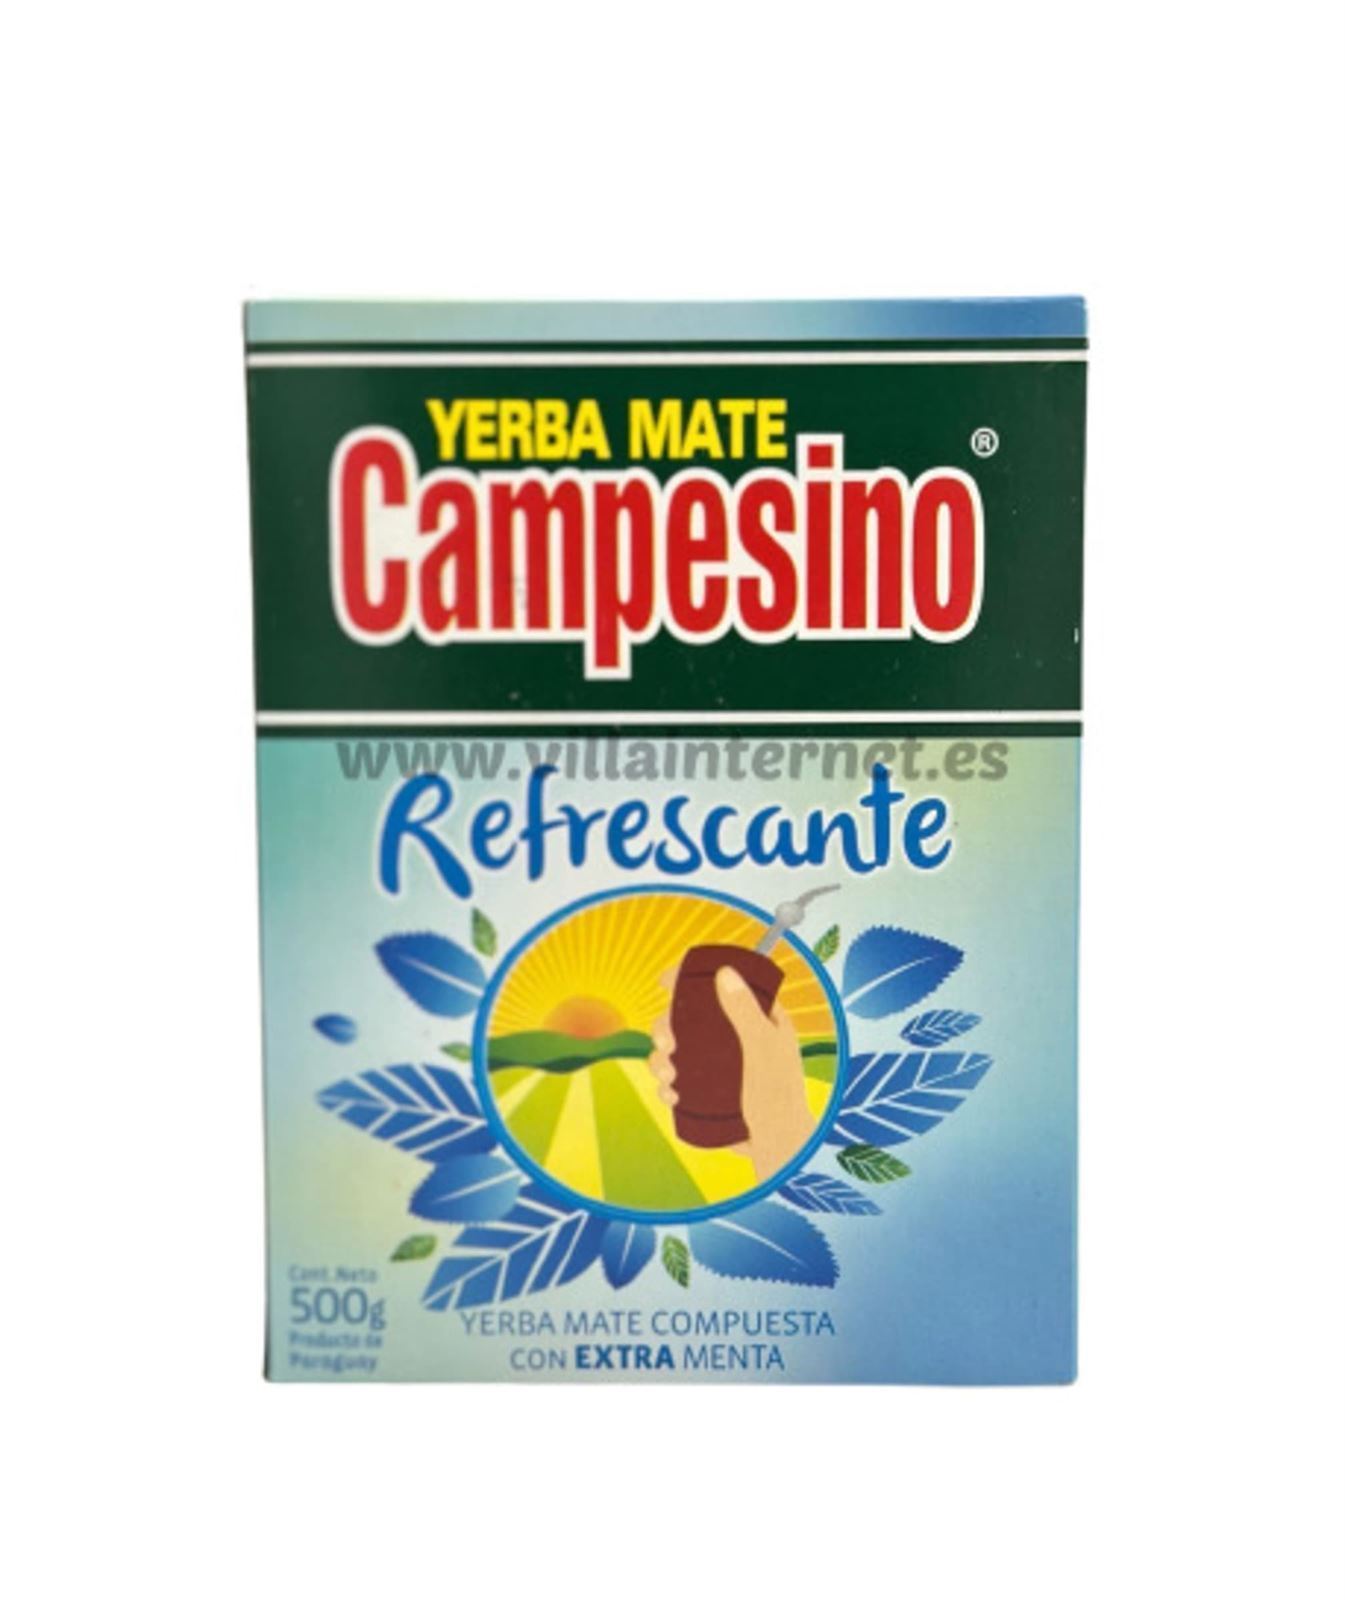 Yerba mate Campesino compuesta refrescante 500g - Imagen 1